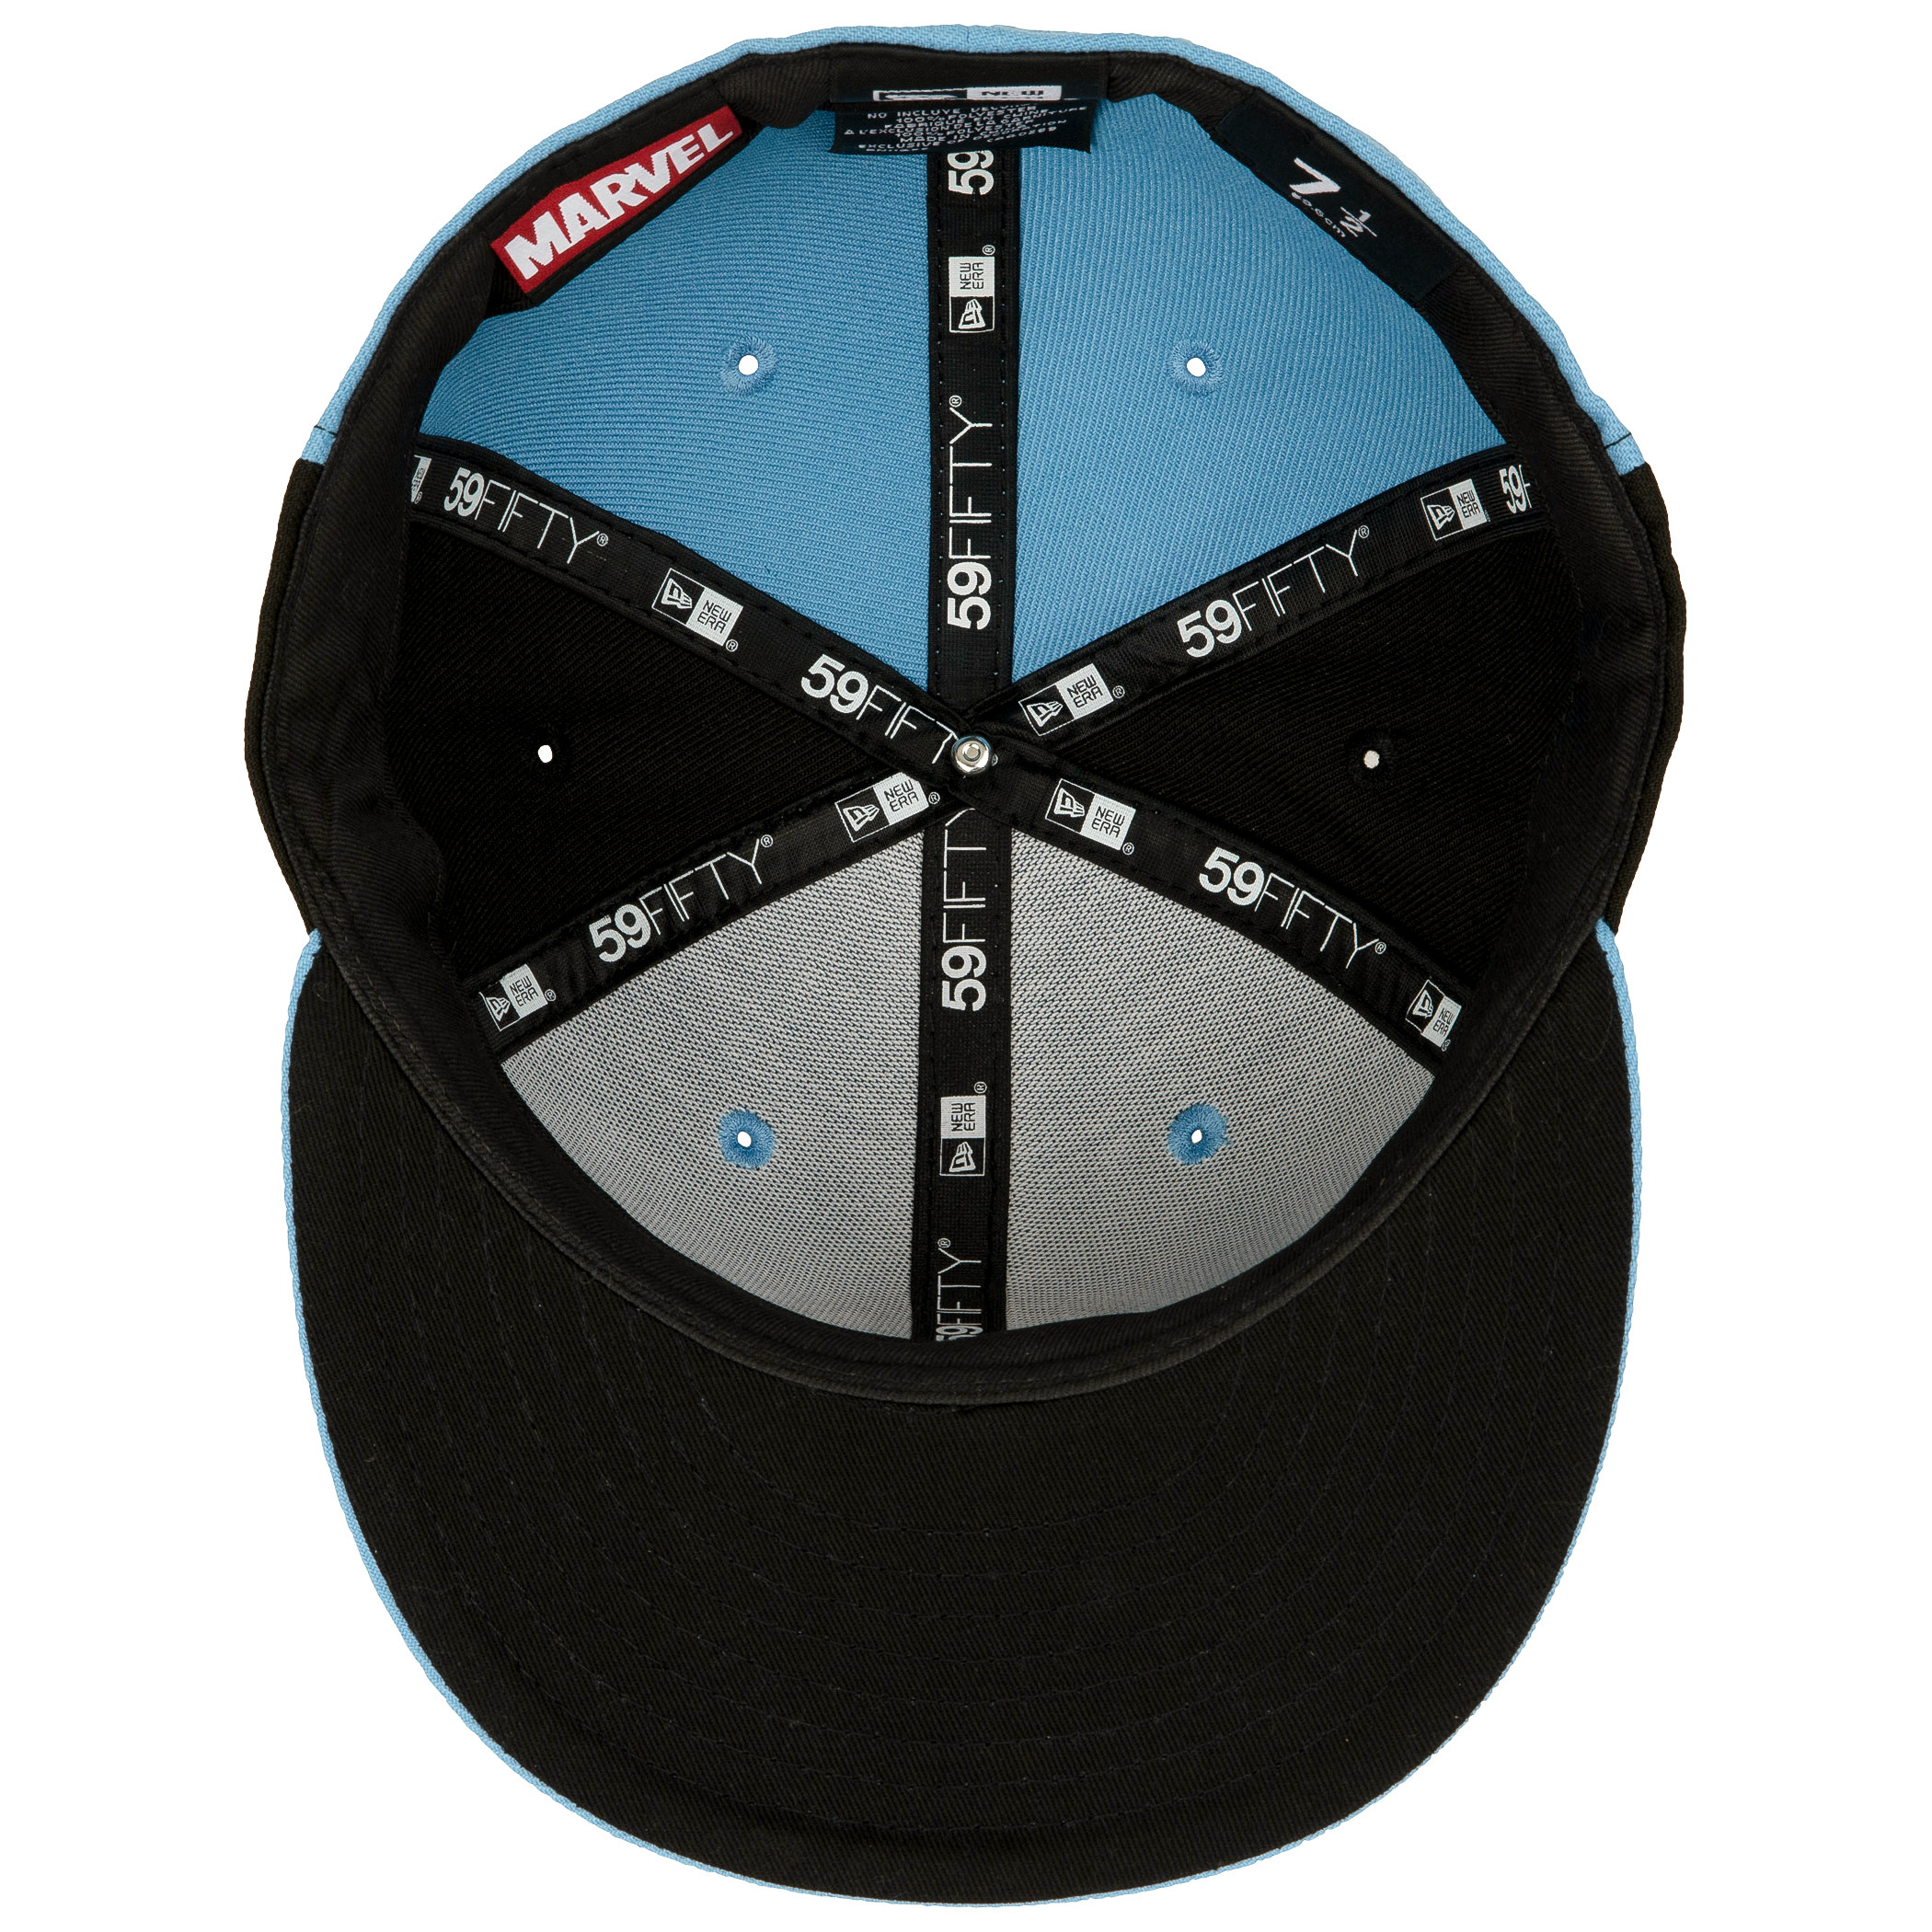 Fantastic 4 Logo Black & Blue Panels New Era 59Fifty Fitted Hat